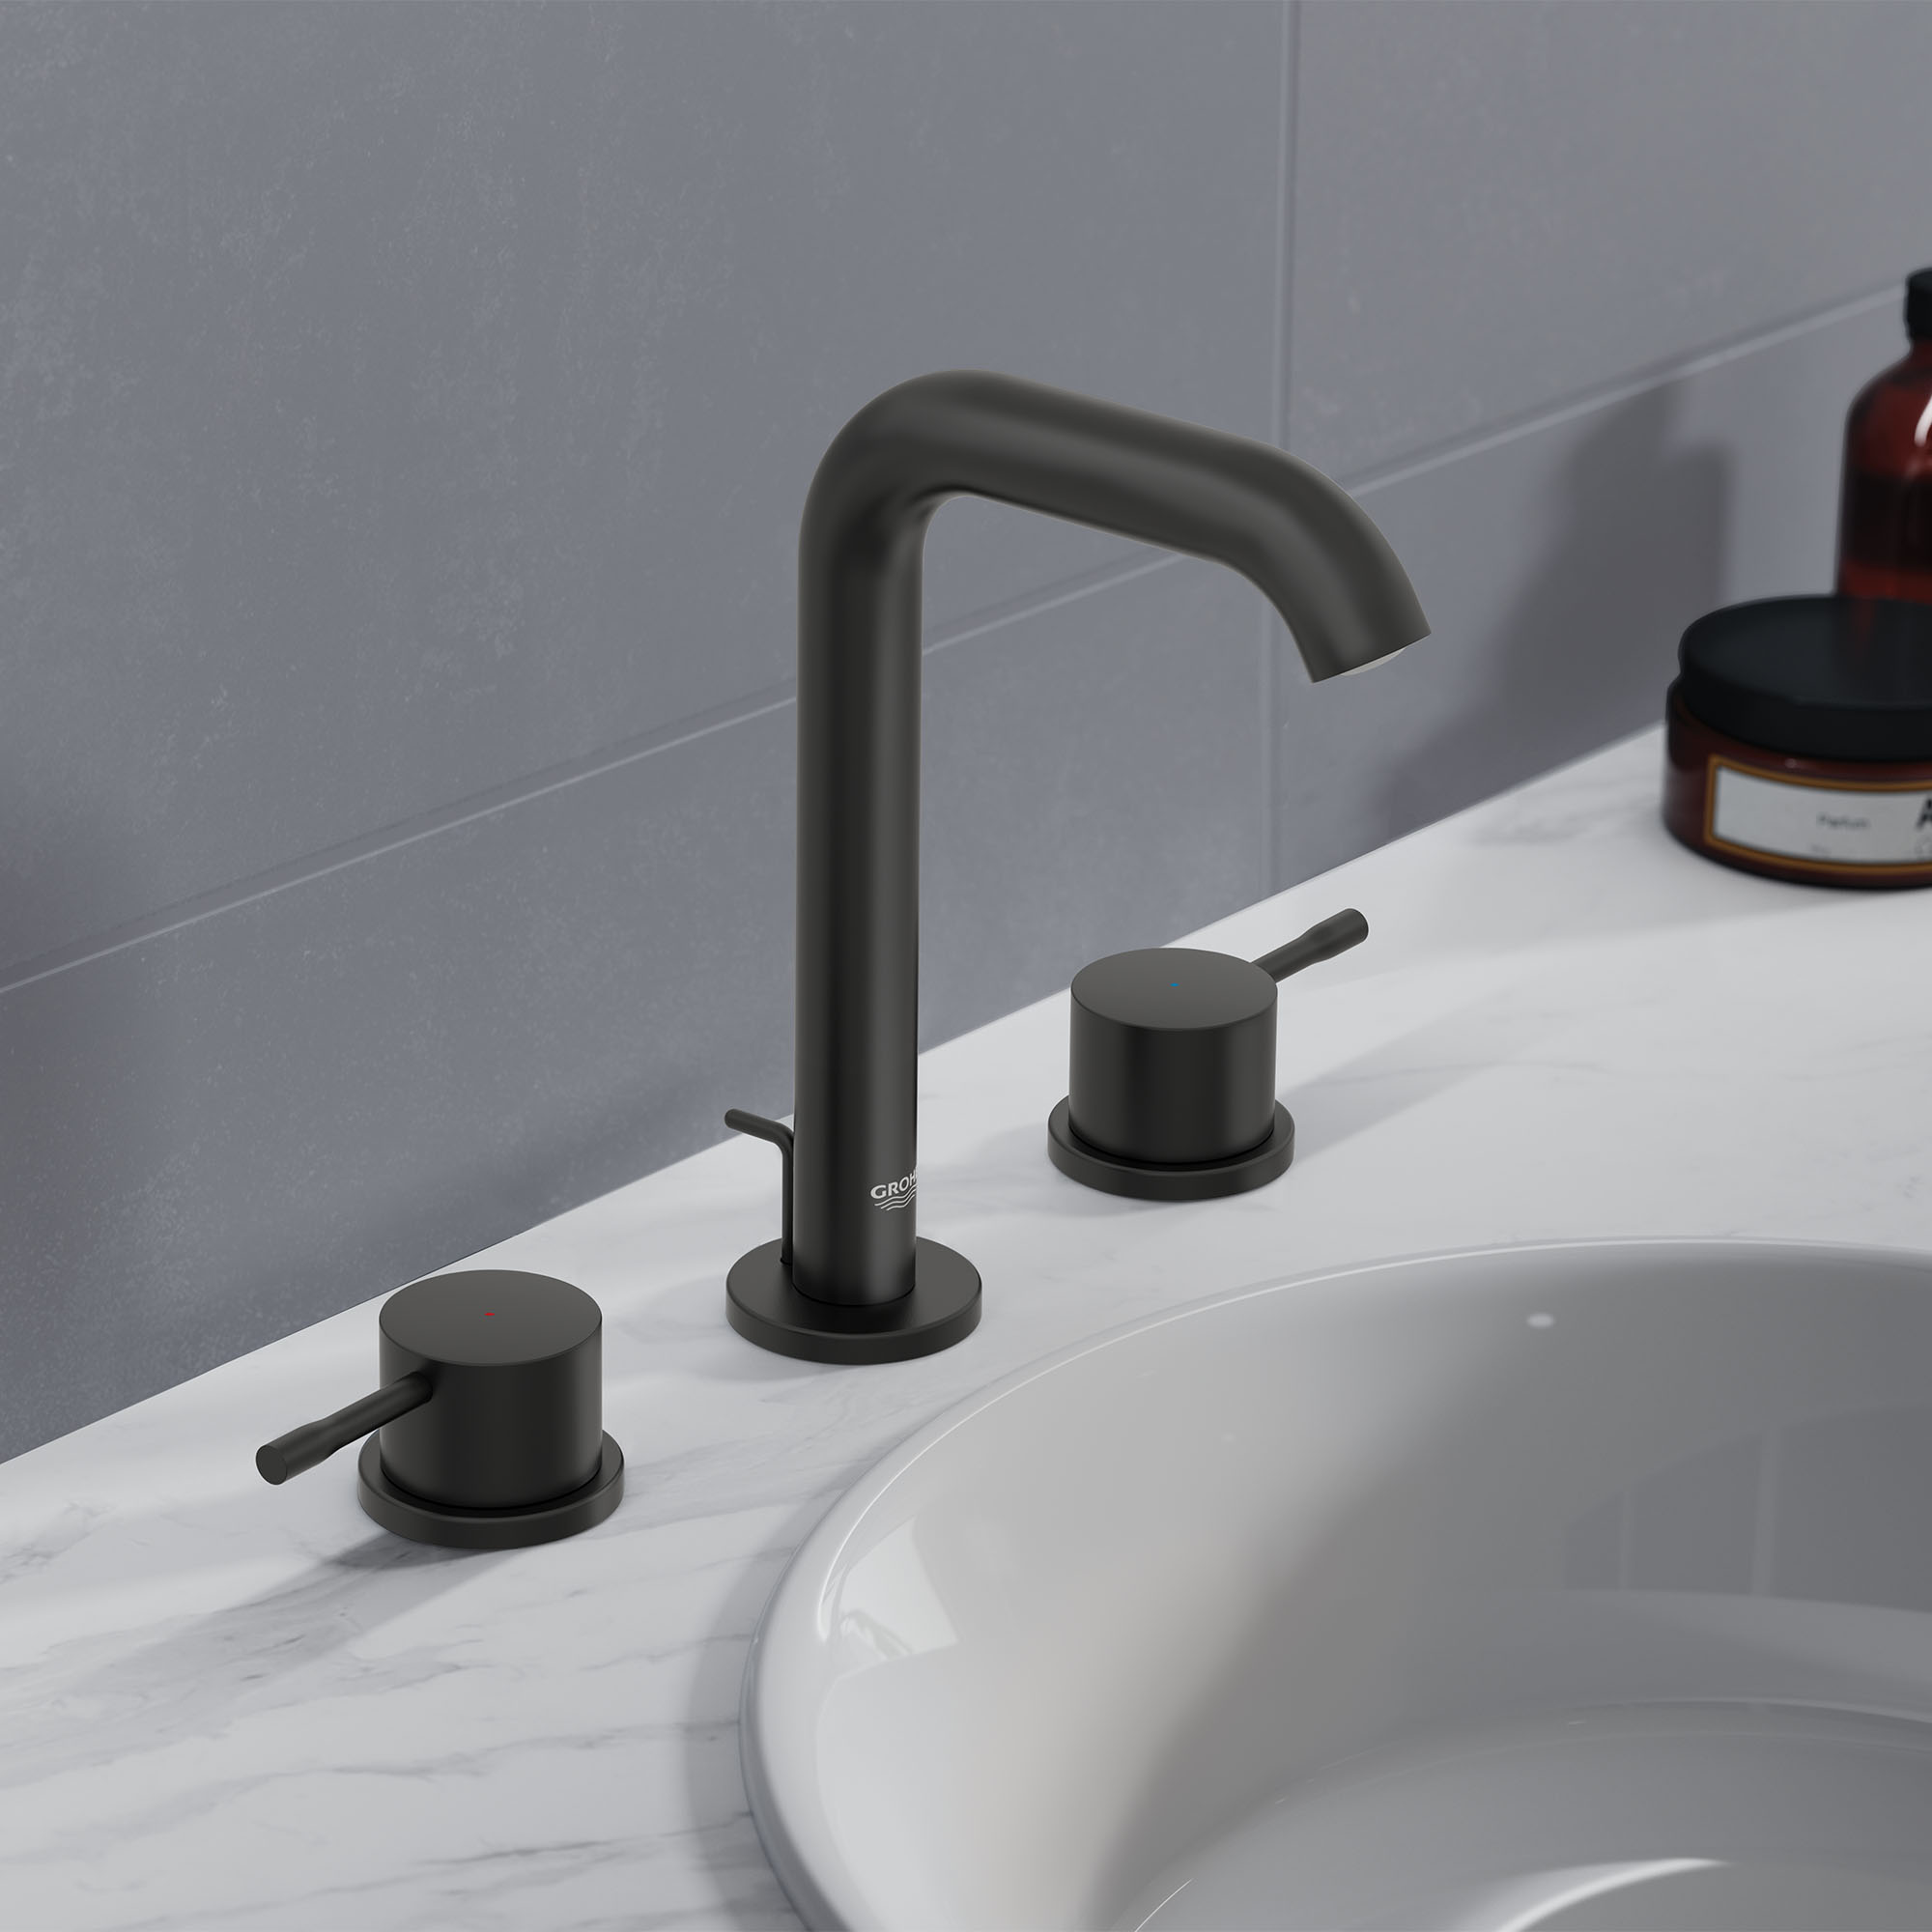 8-inch Widespread 2-Handle M-Size Bathroom Faucet, 1.2 GPM (4.5 L/min)